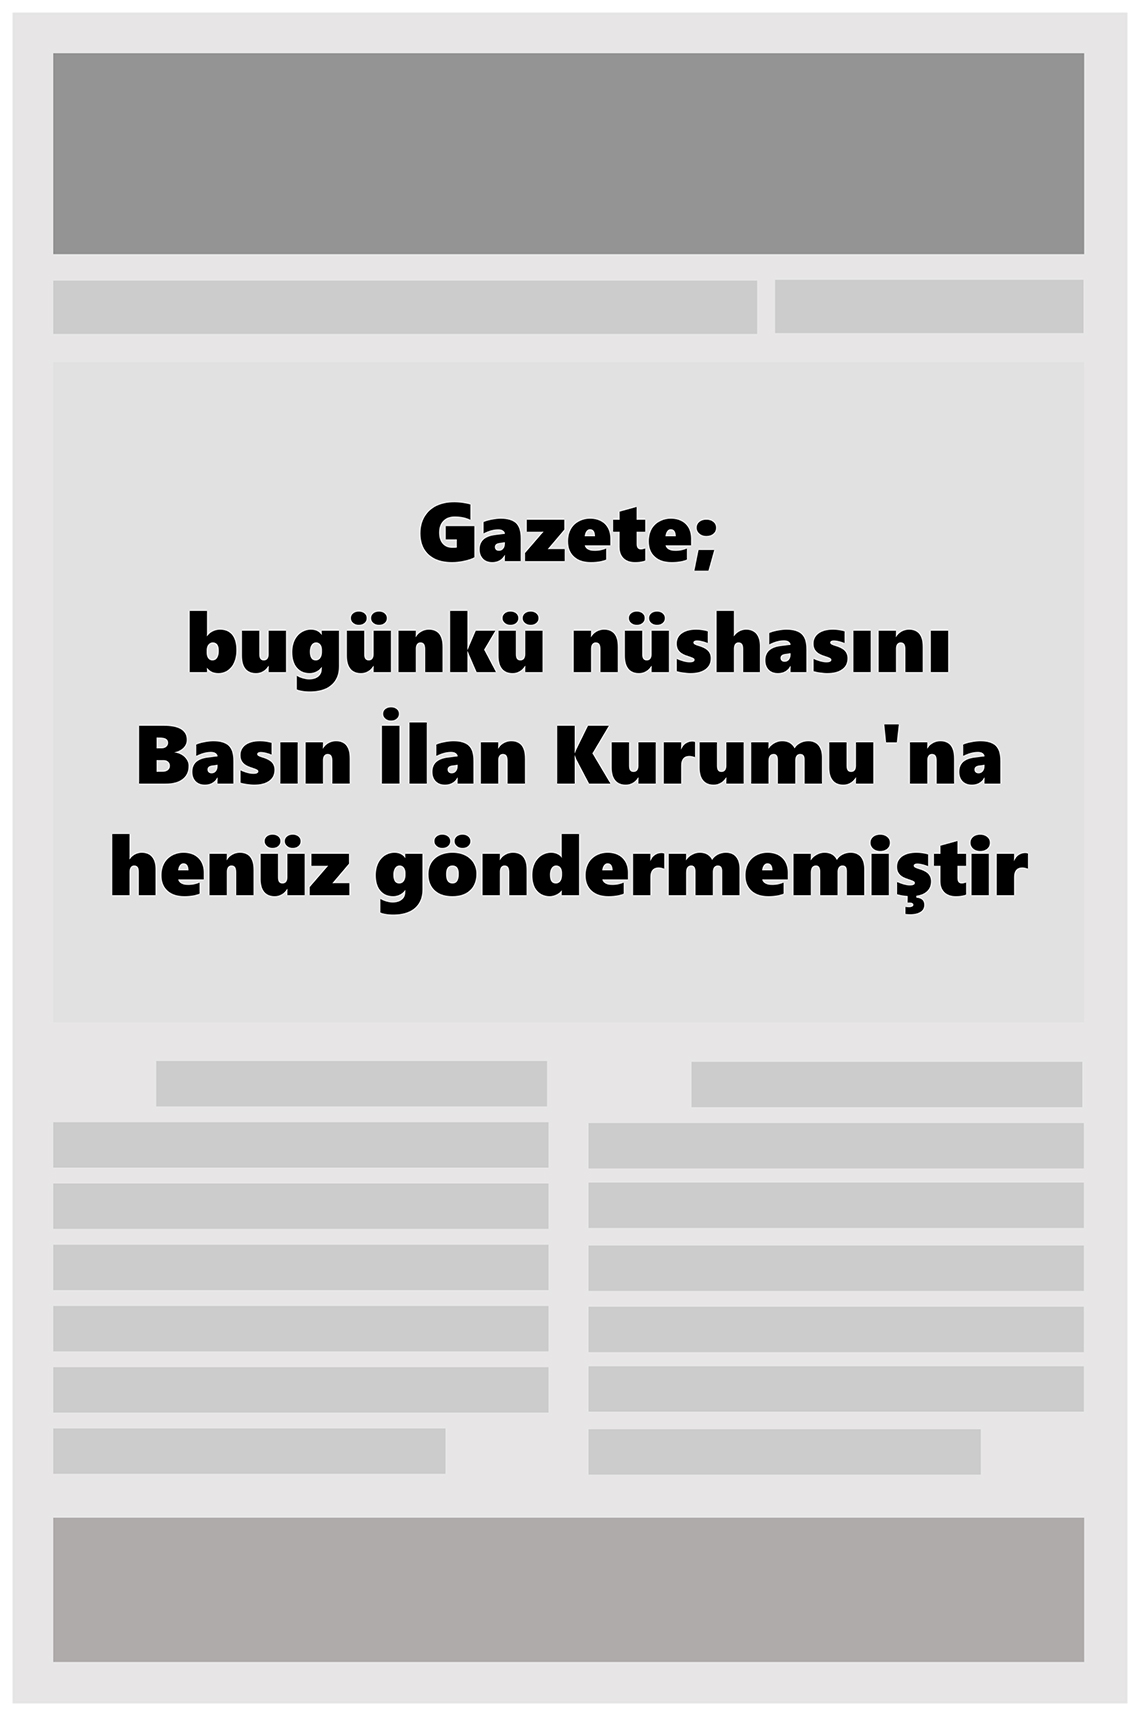 02 Ekim 2022 Gazete 3 Gazete Manşeti